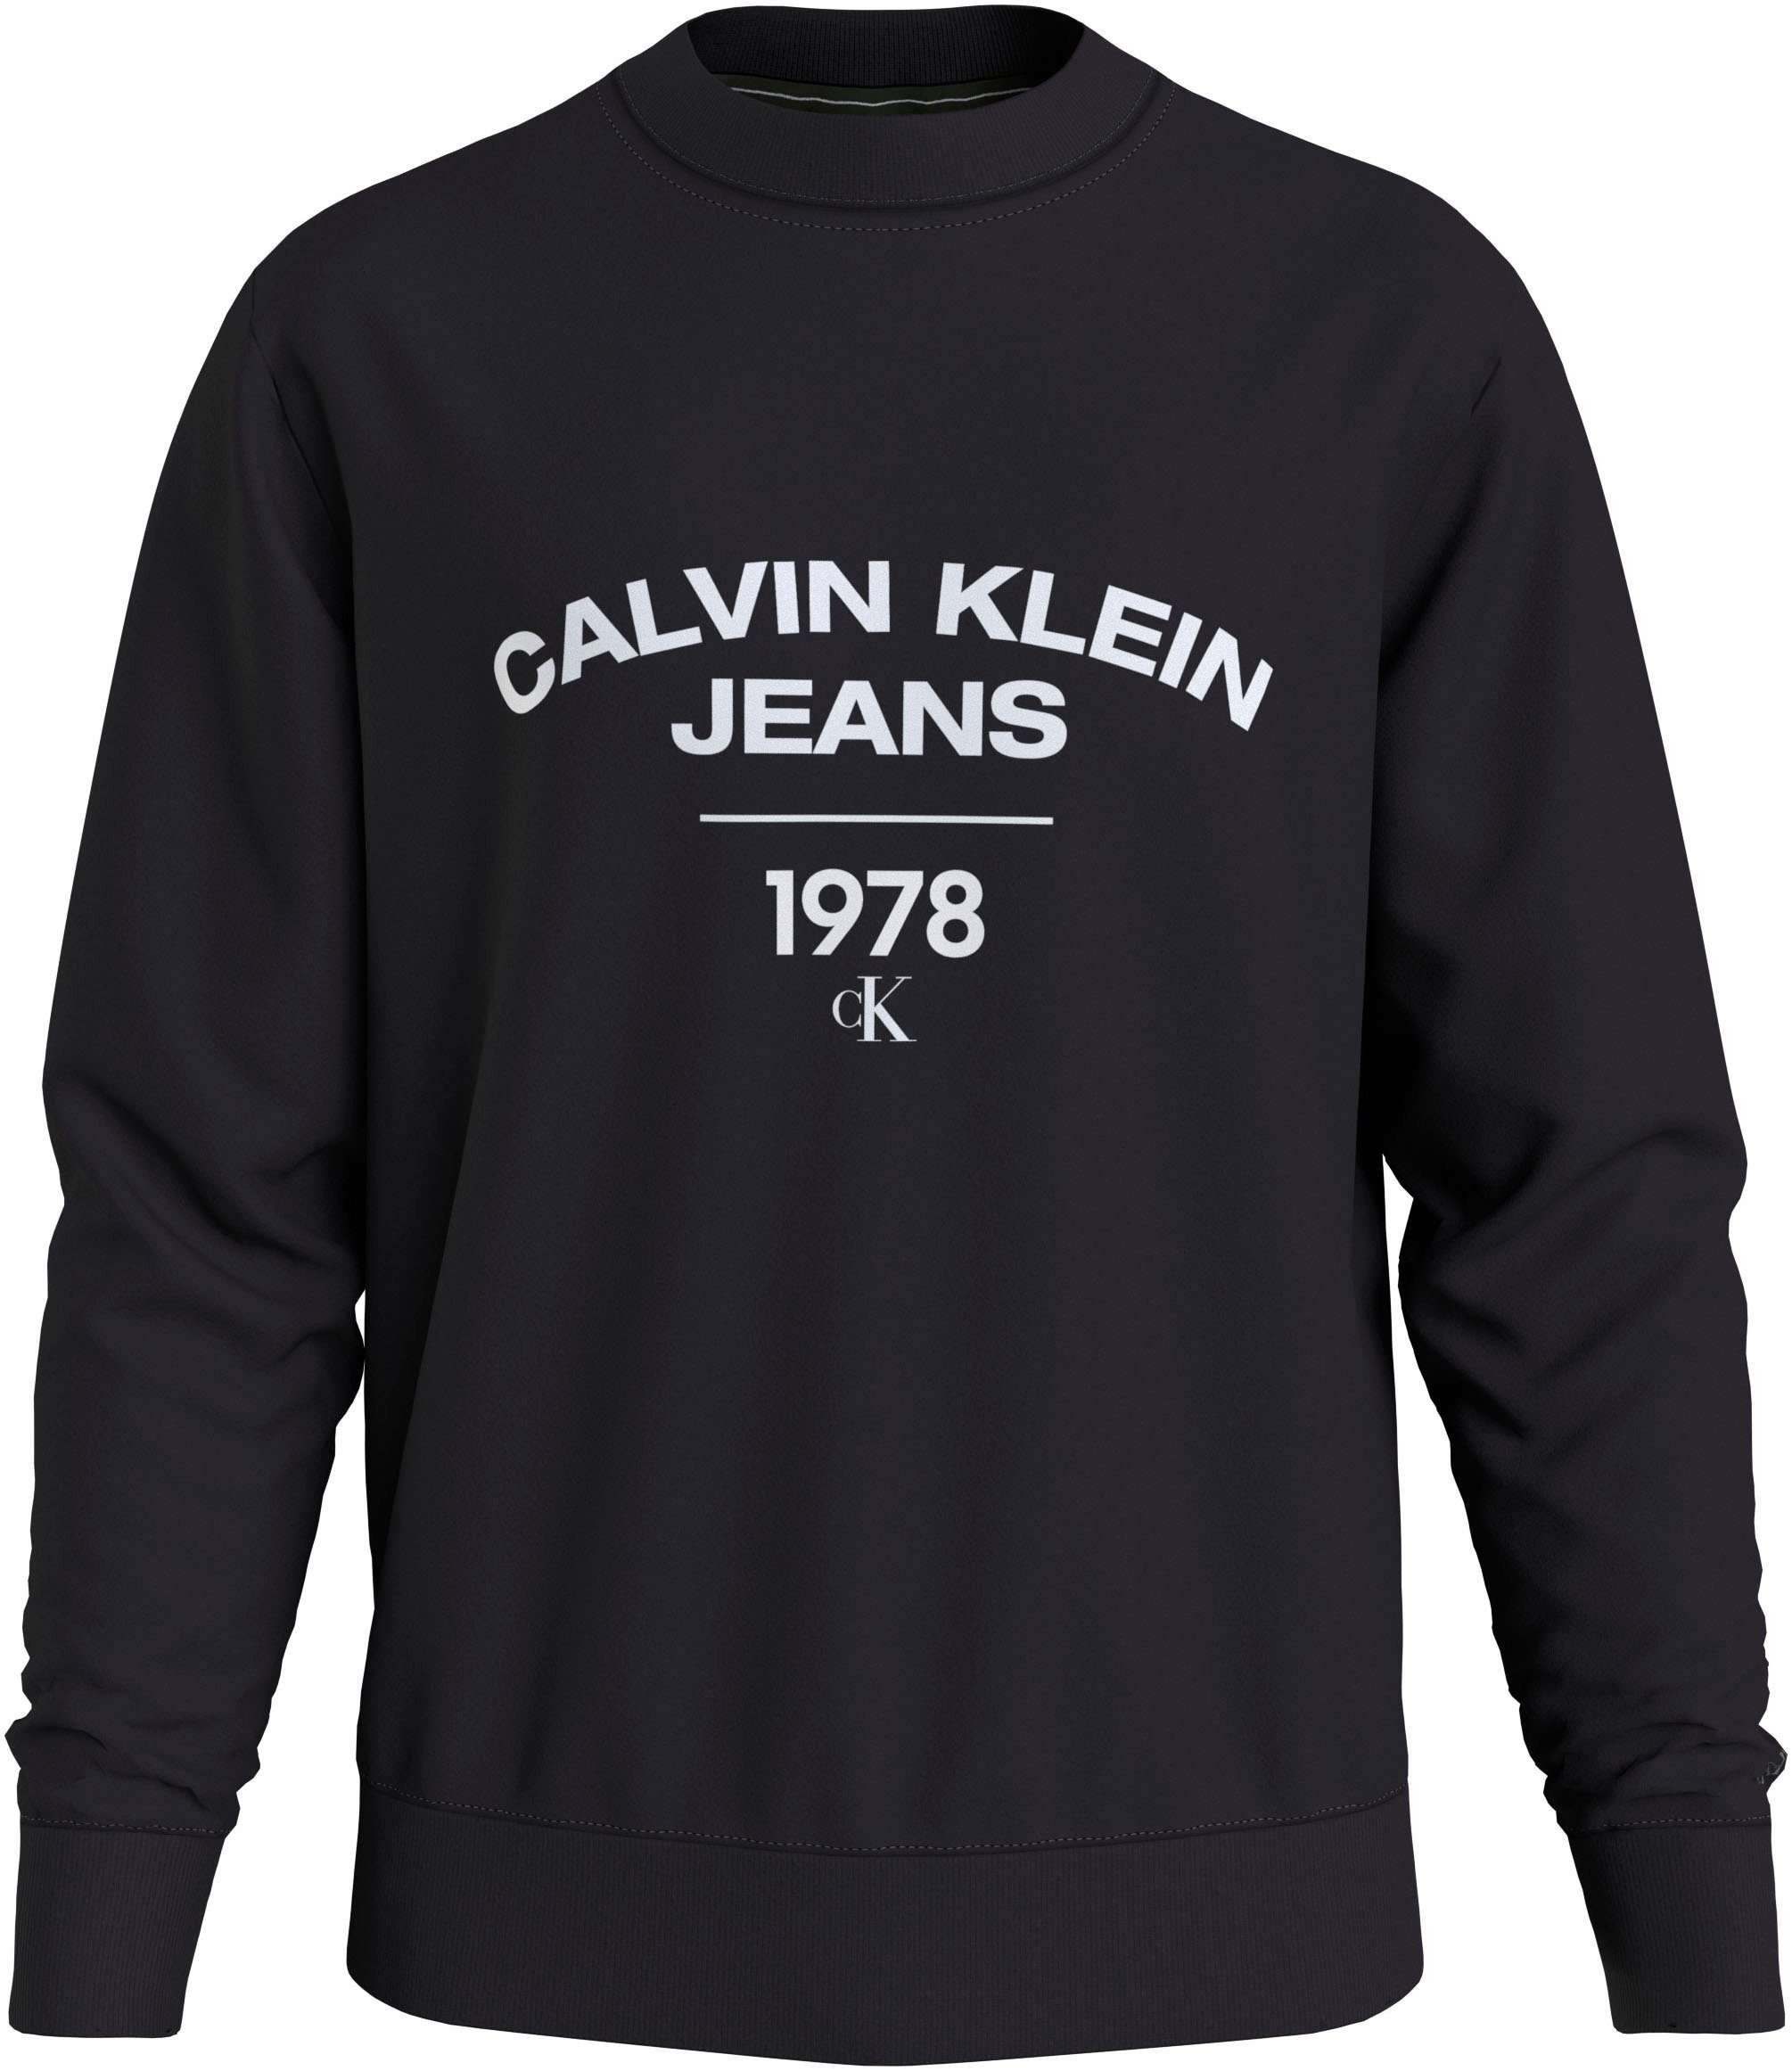 CREW Calvin Black Klein NECK Ck Sweatshirt CURVE Jeans VARSITY